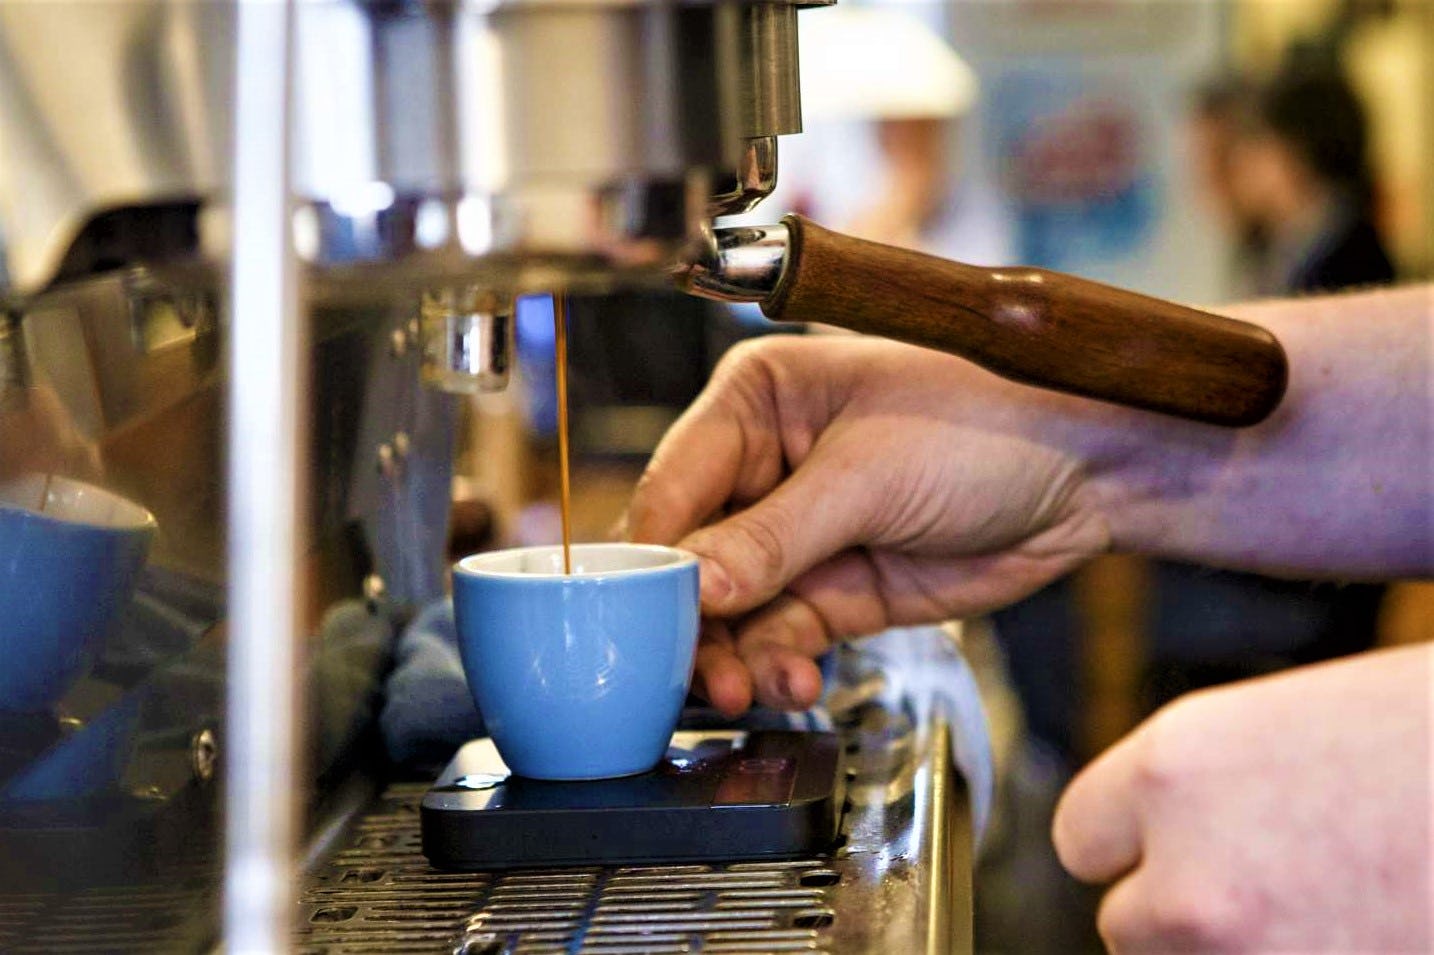 Smaakbeleving: koffie in dikwandige blauwe kop zoeter dan in dun wit kopje